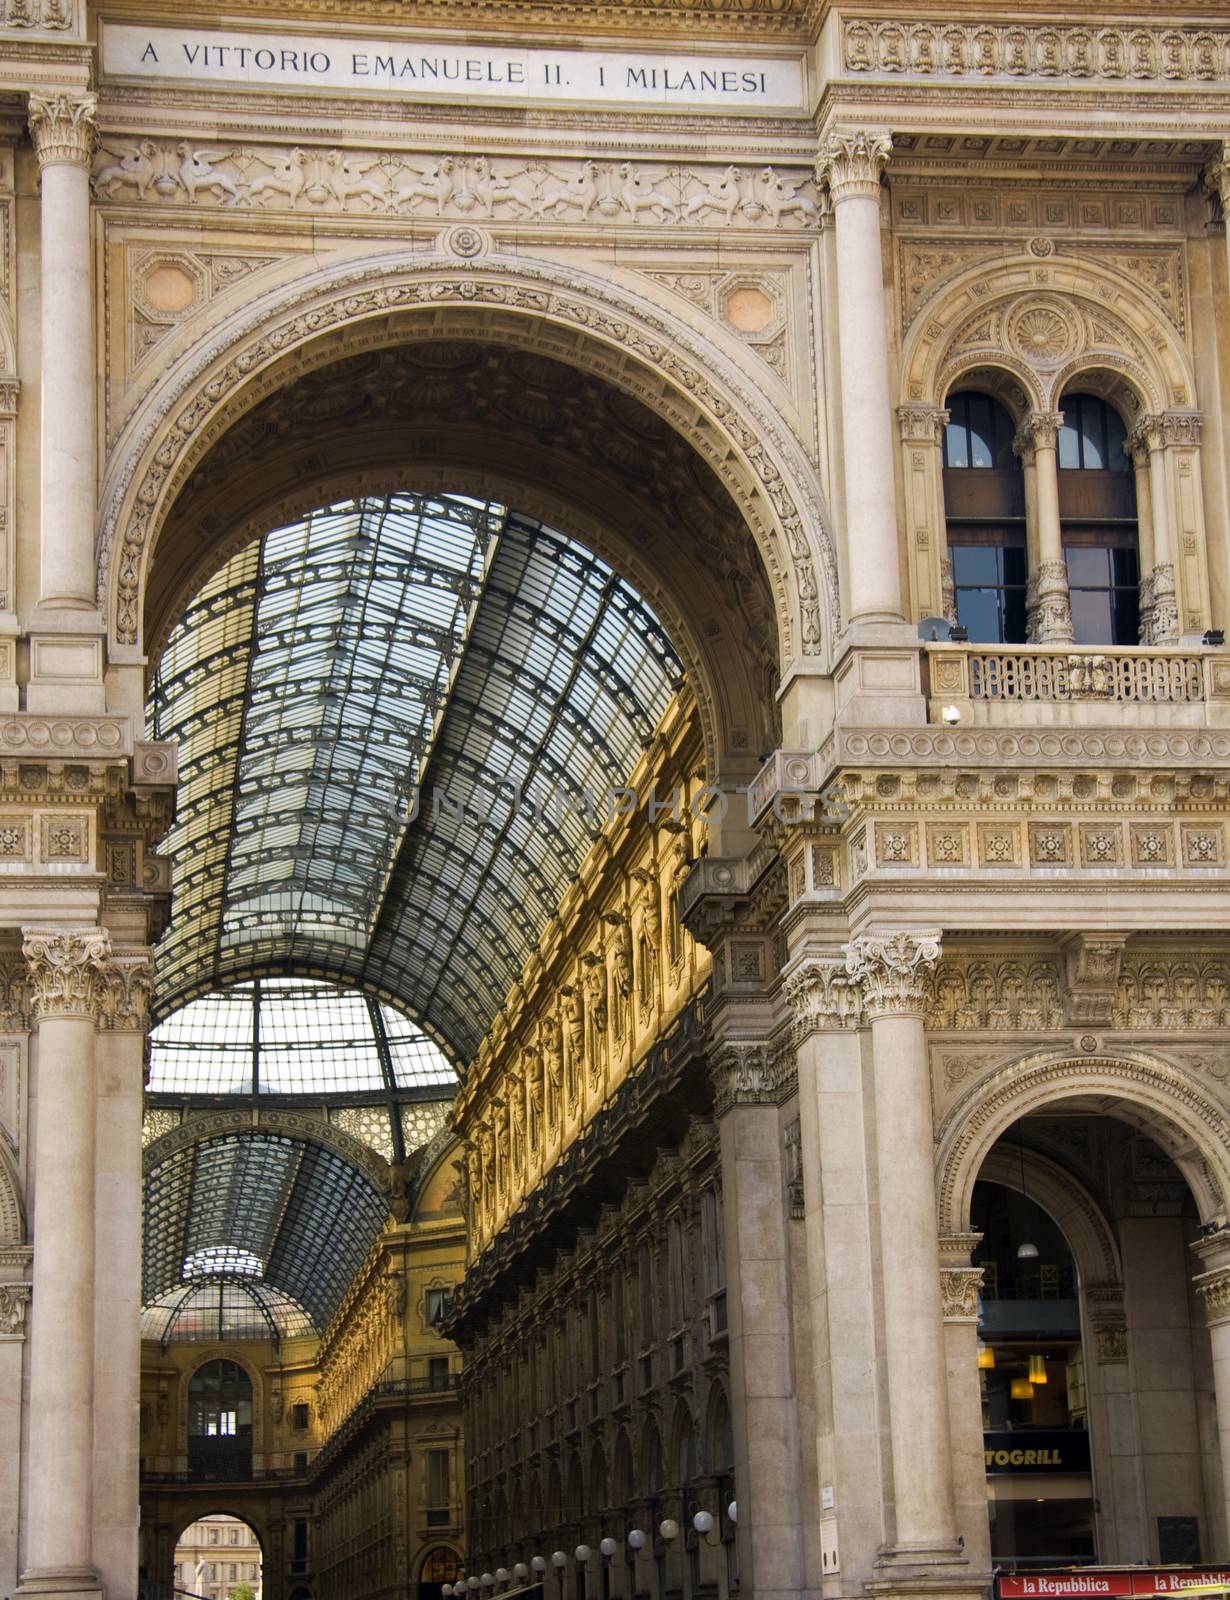 Shopping center Galleria Vittorio Emanuele in Milan by fotoecho